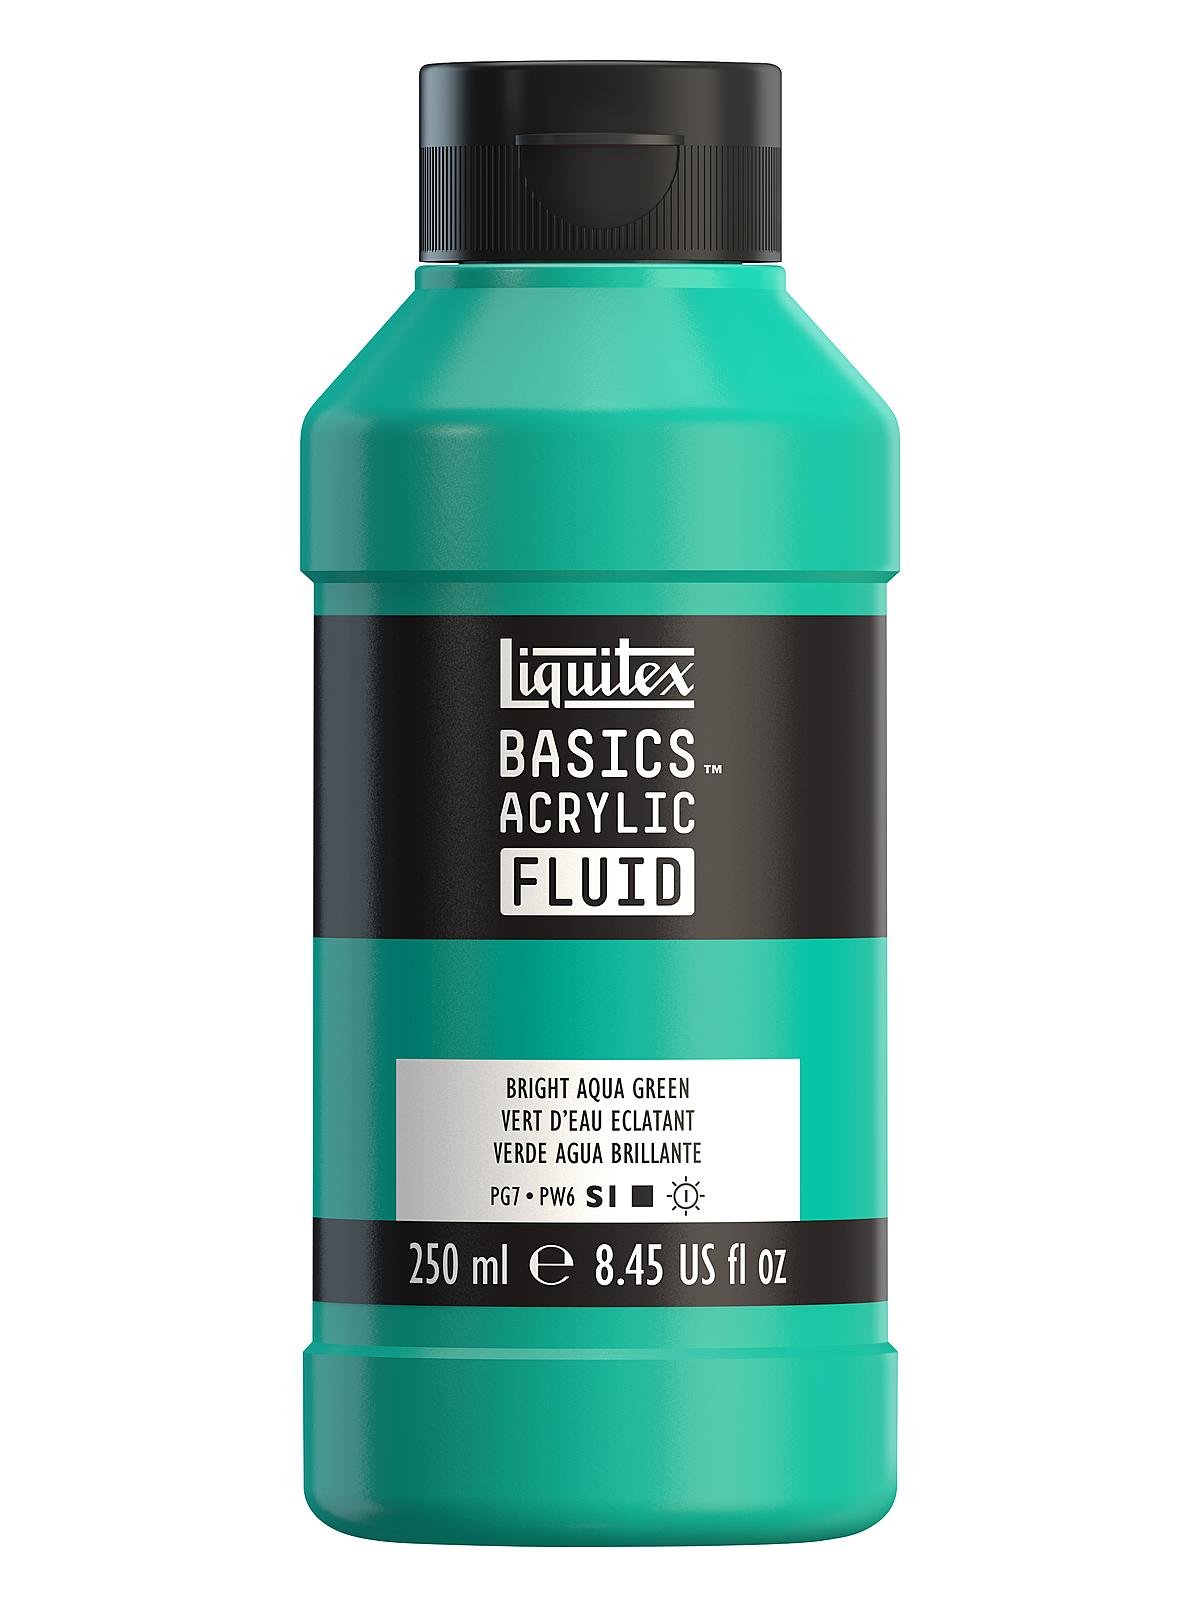 Liquitex BASICS Acrylic Fluid - Medium Magenta, 4oz Bottle